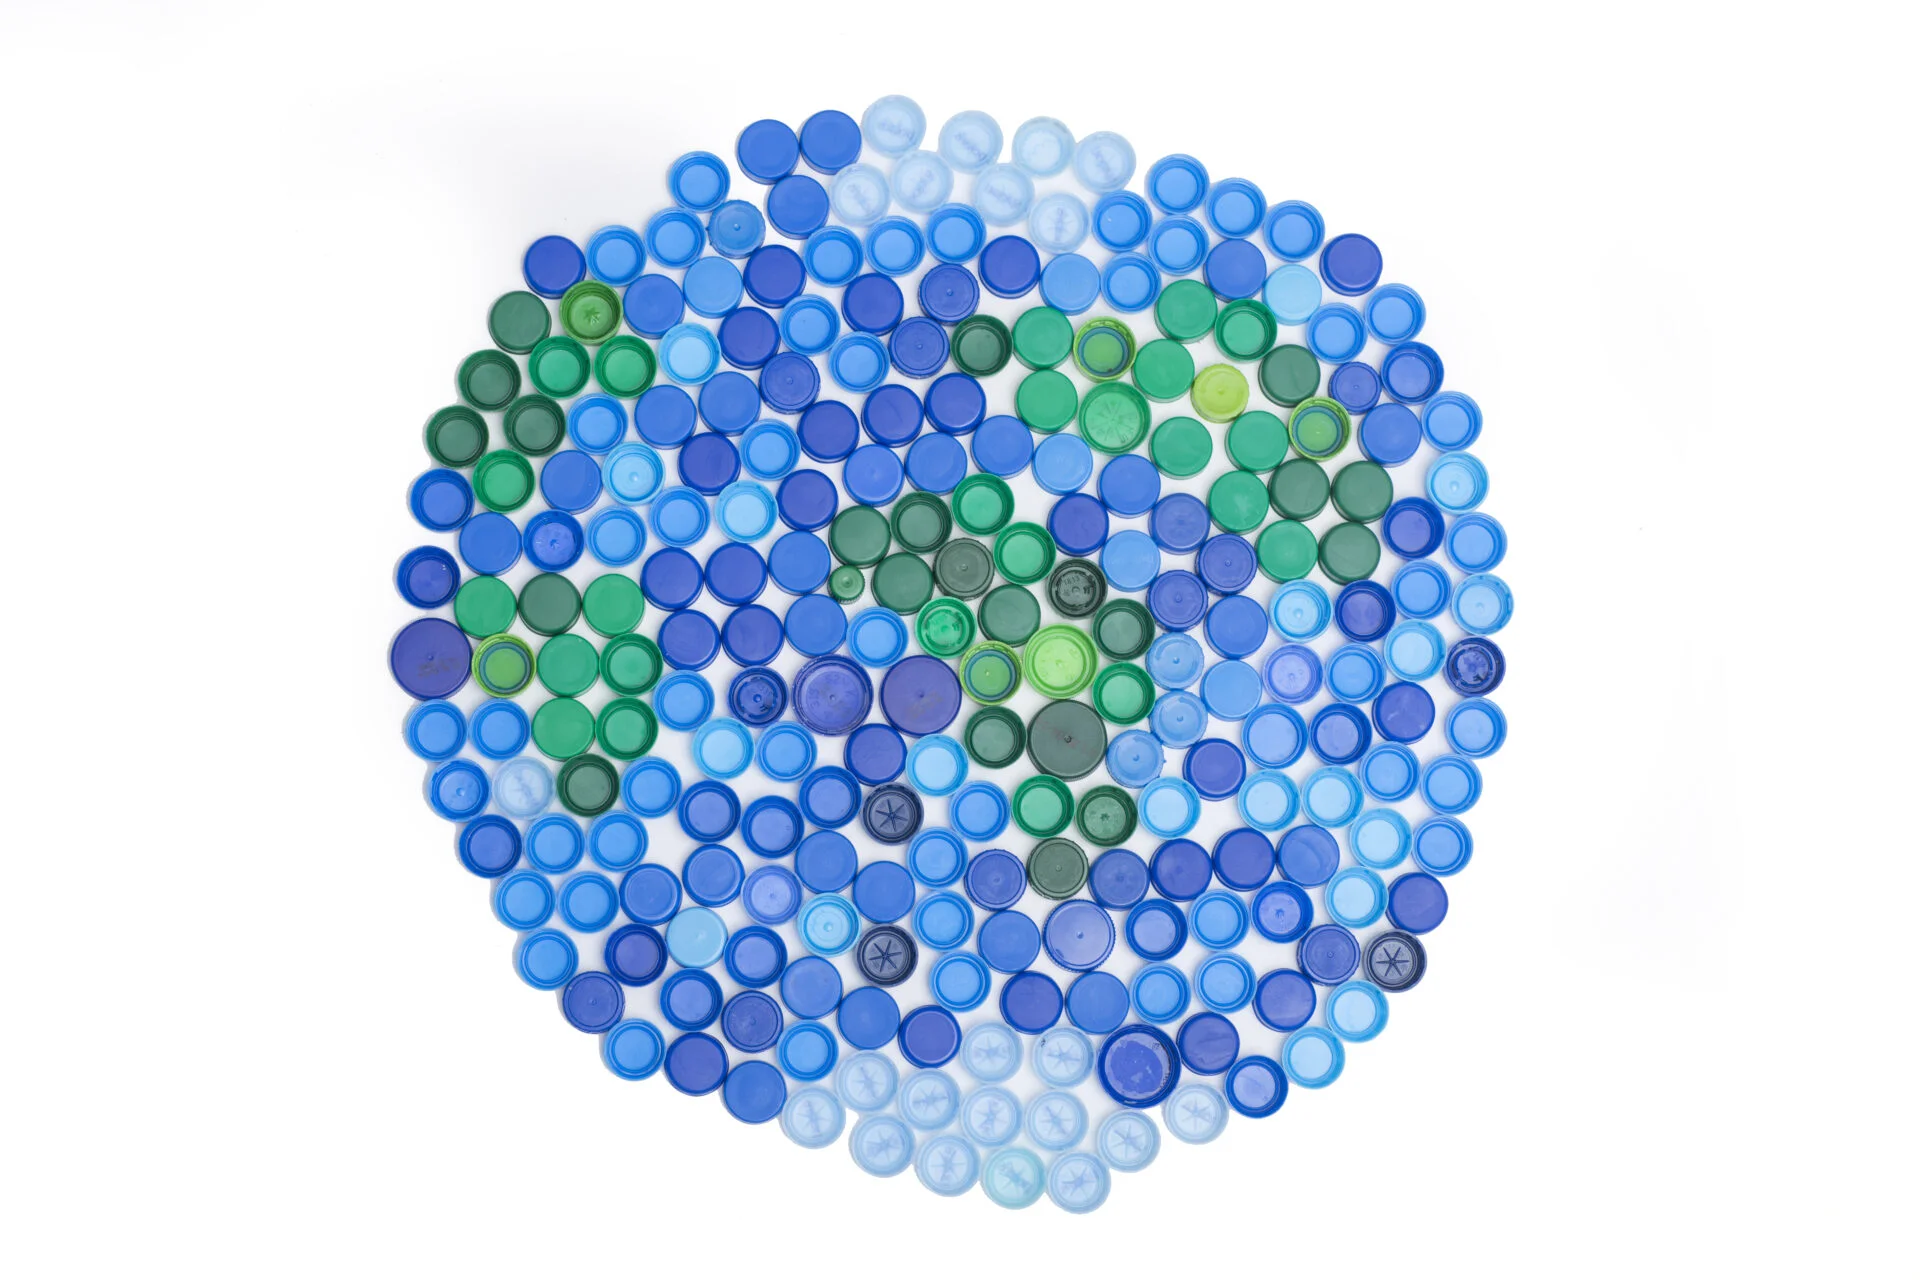 Bottle caps in a circle like the globe